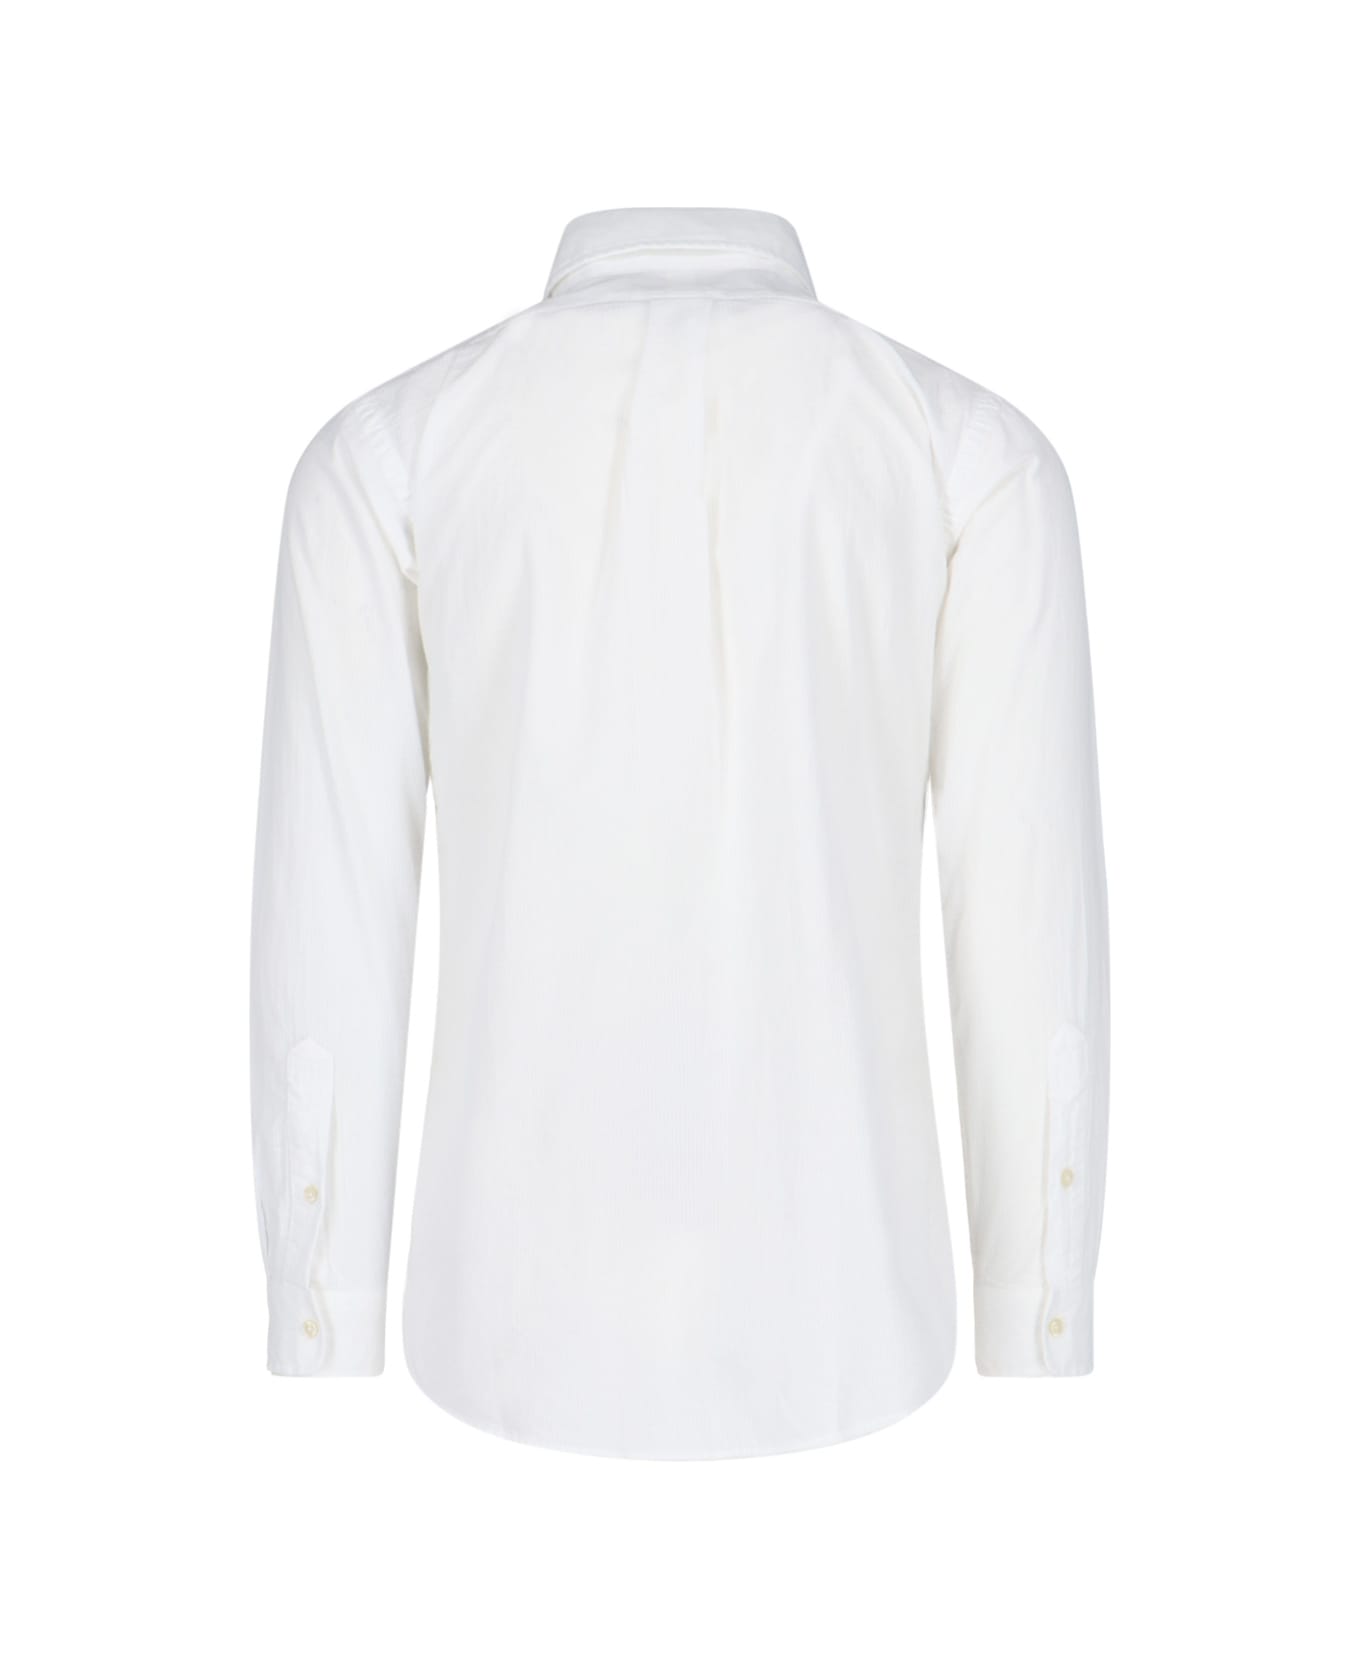 Polo Ralph Lauren Seersucker Shirt - White シャツ